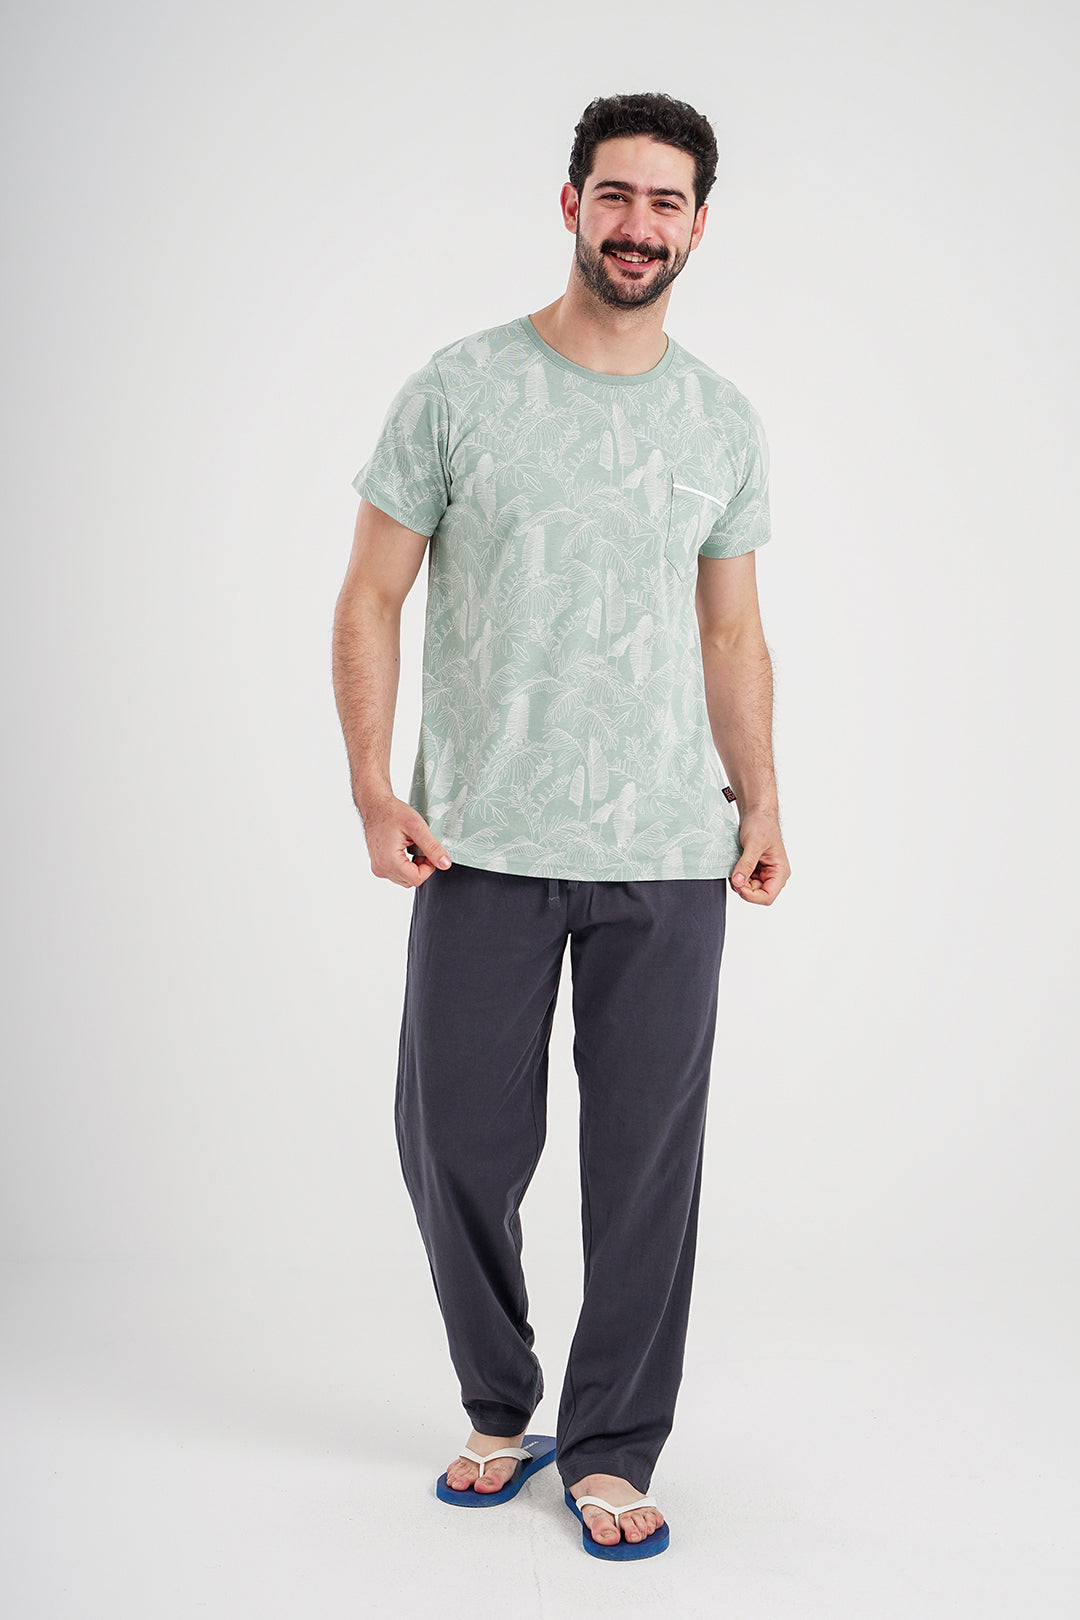 Make Smart Choice Men's Pajamas with Printed Pants